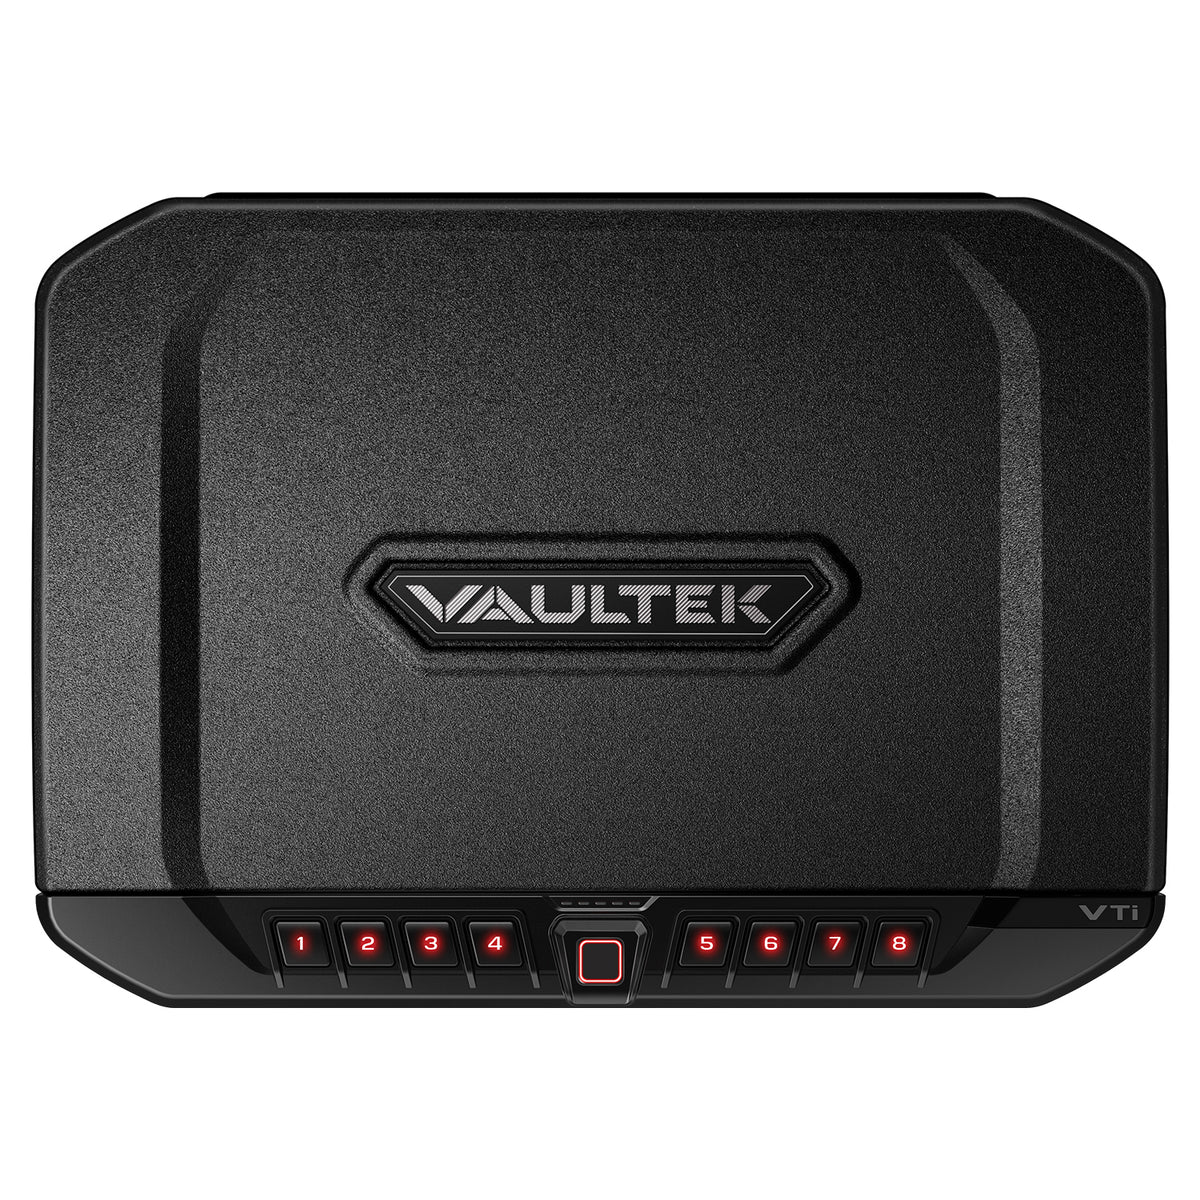 Vaultek® NVTi Full Size Rugged WiFi and Biometric Smart Safe